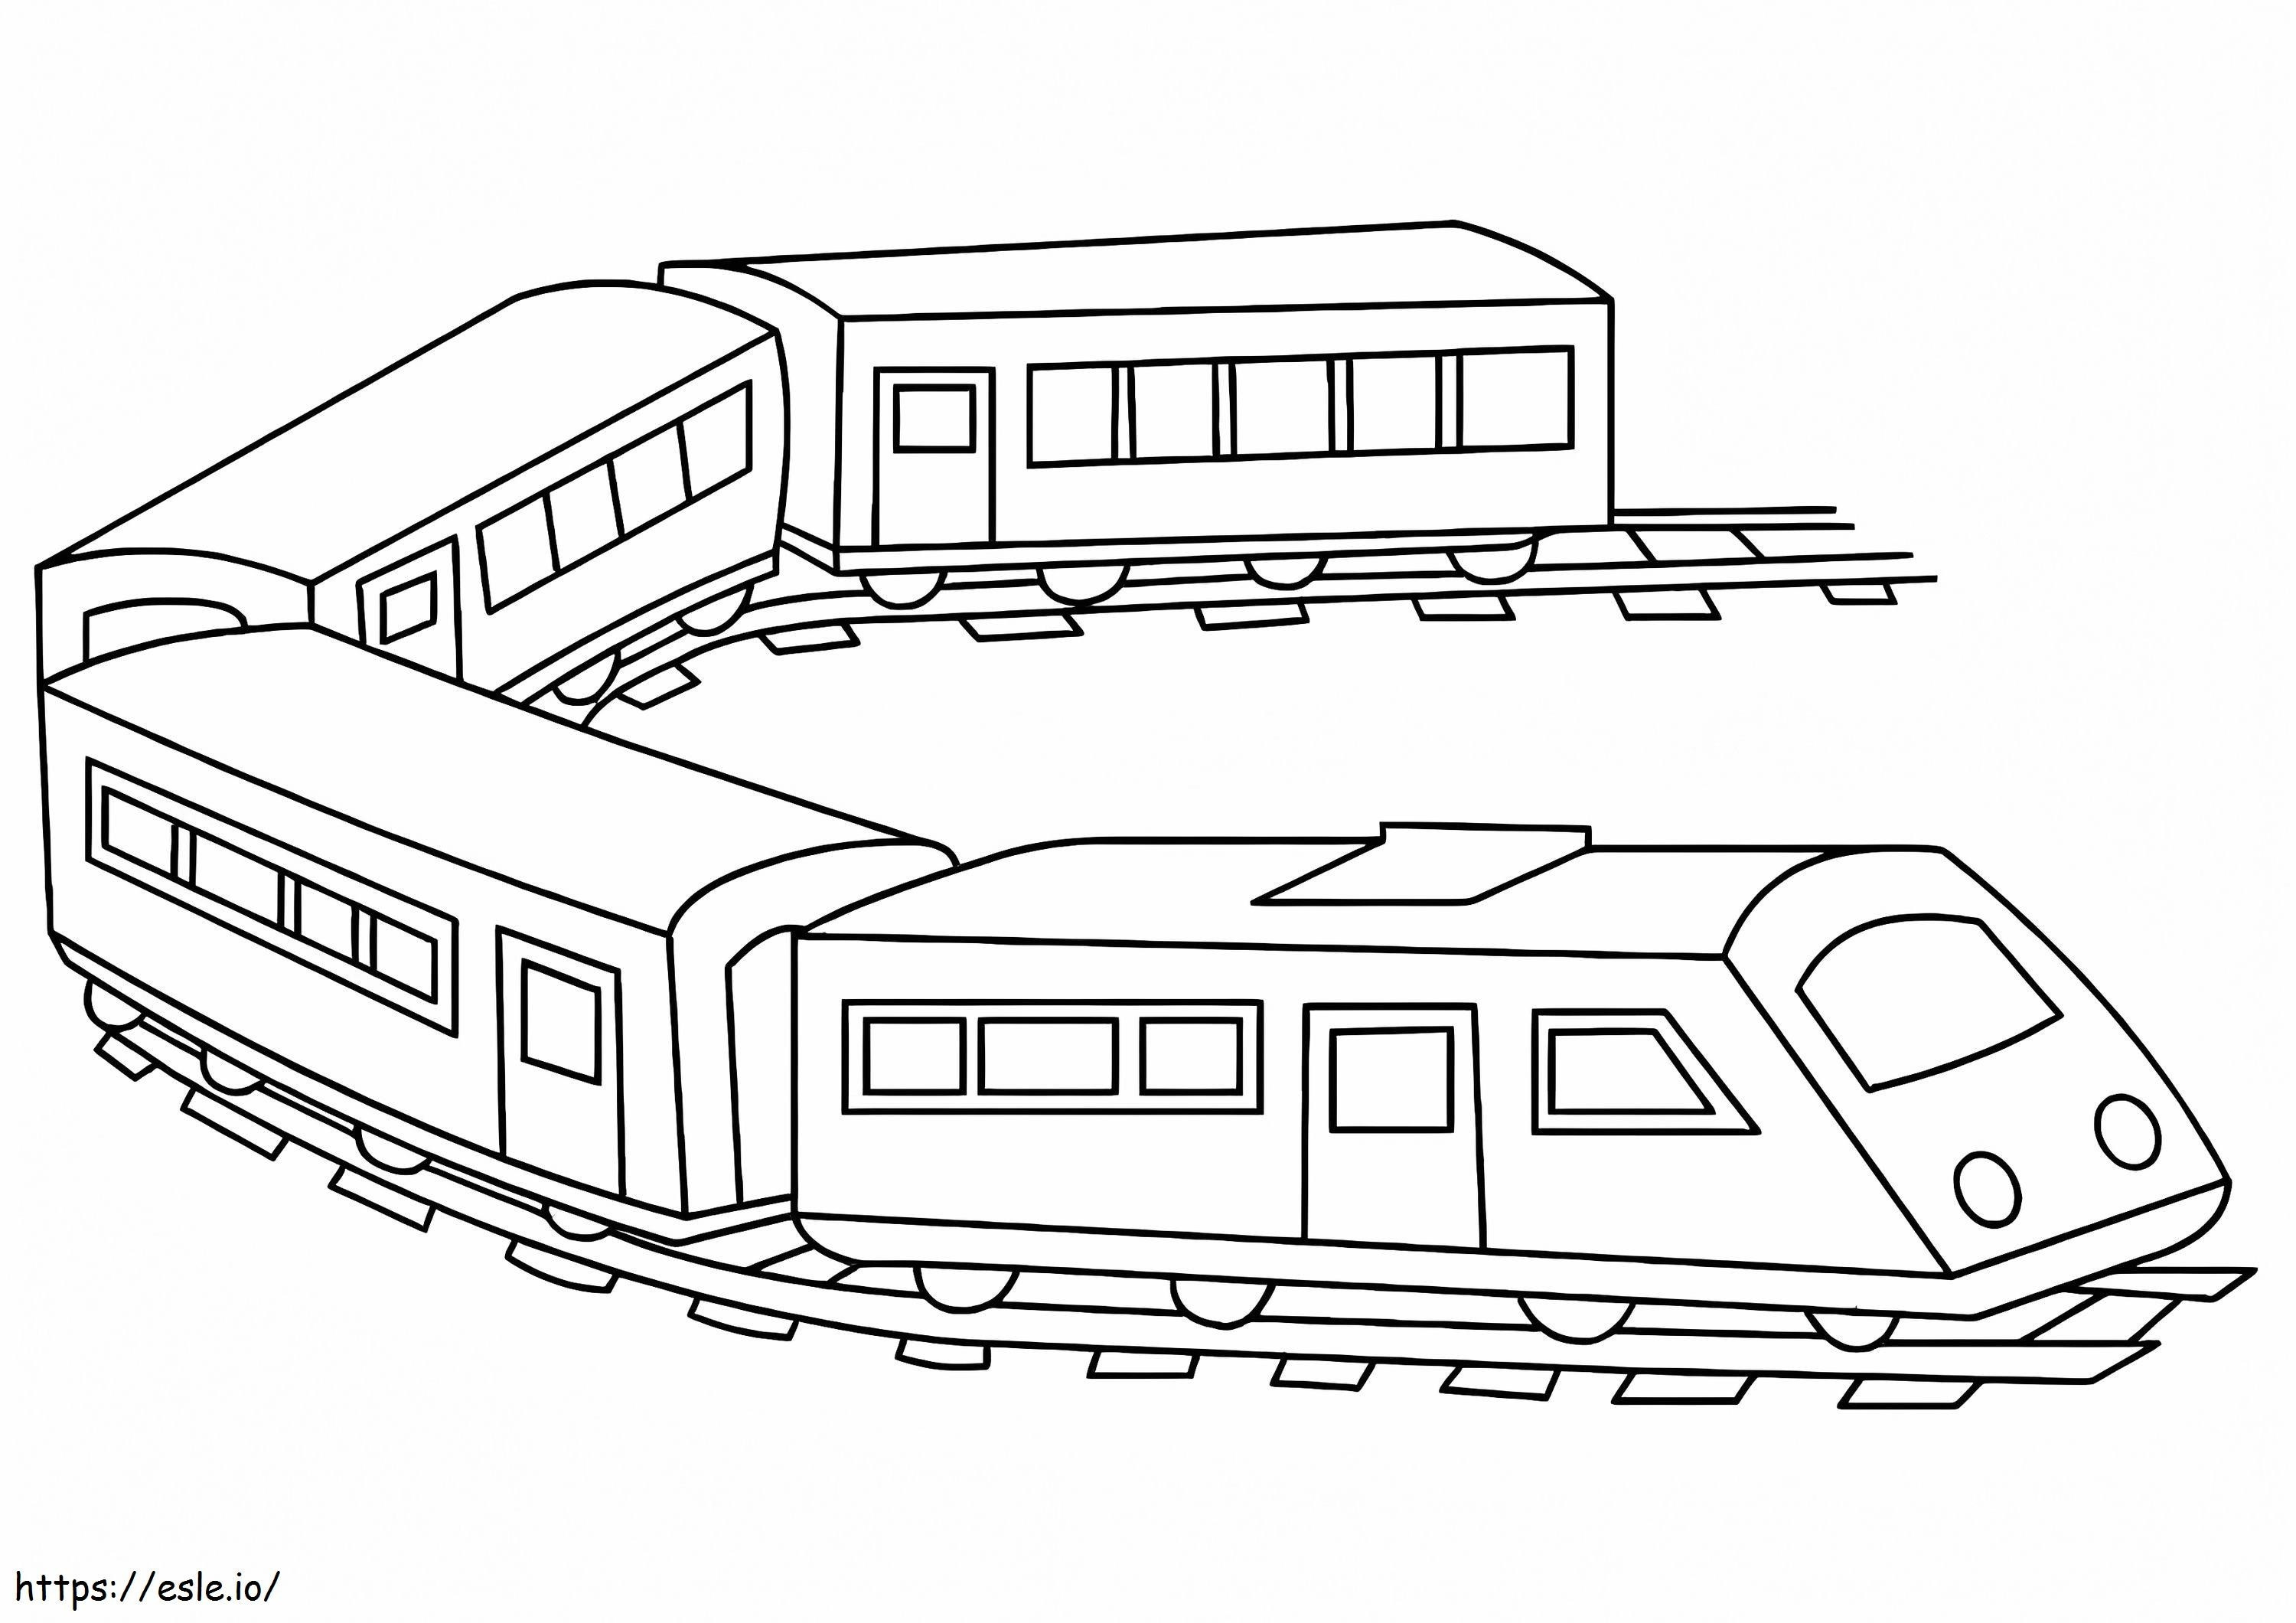 Printable Passenger Train coloring page